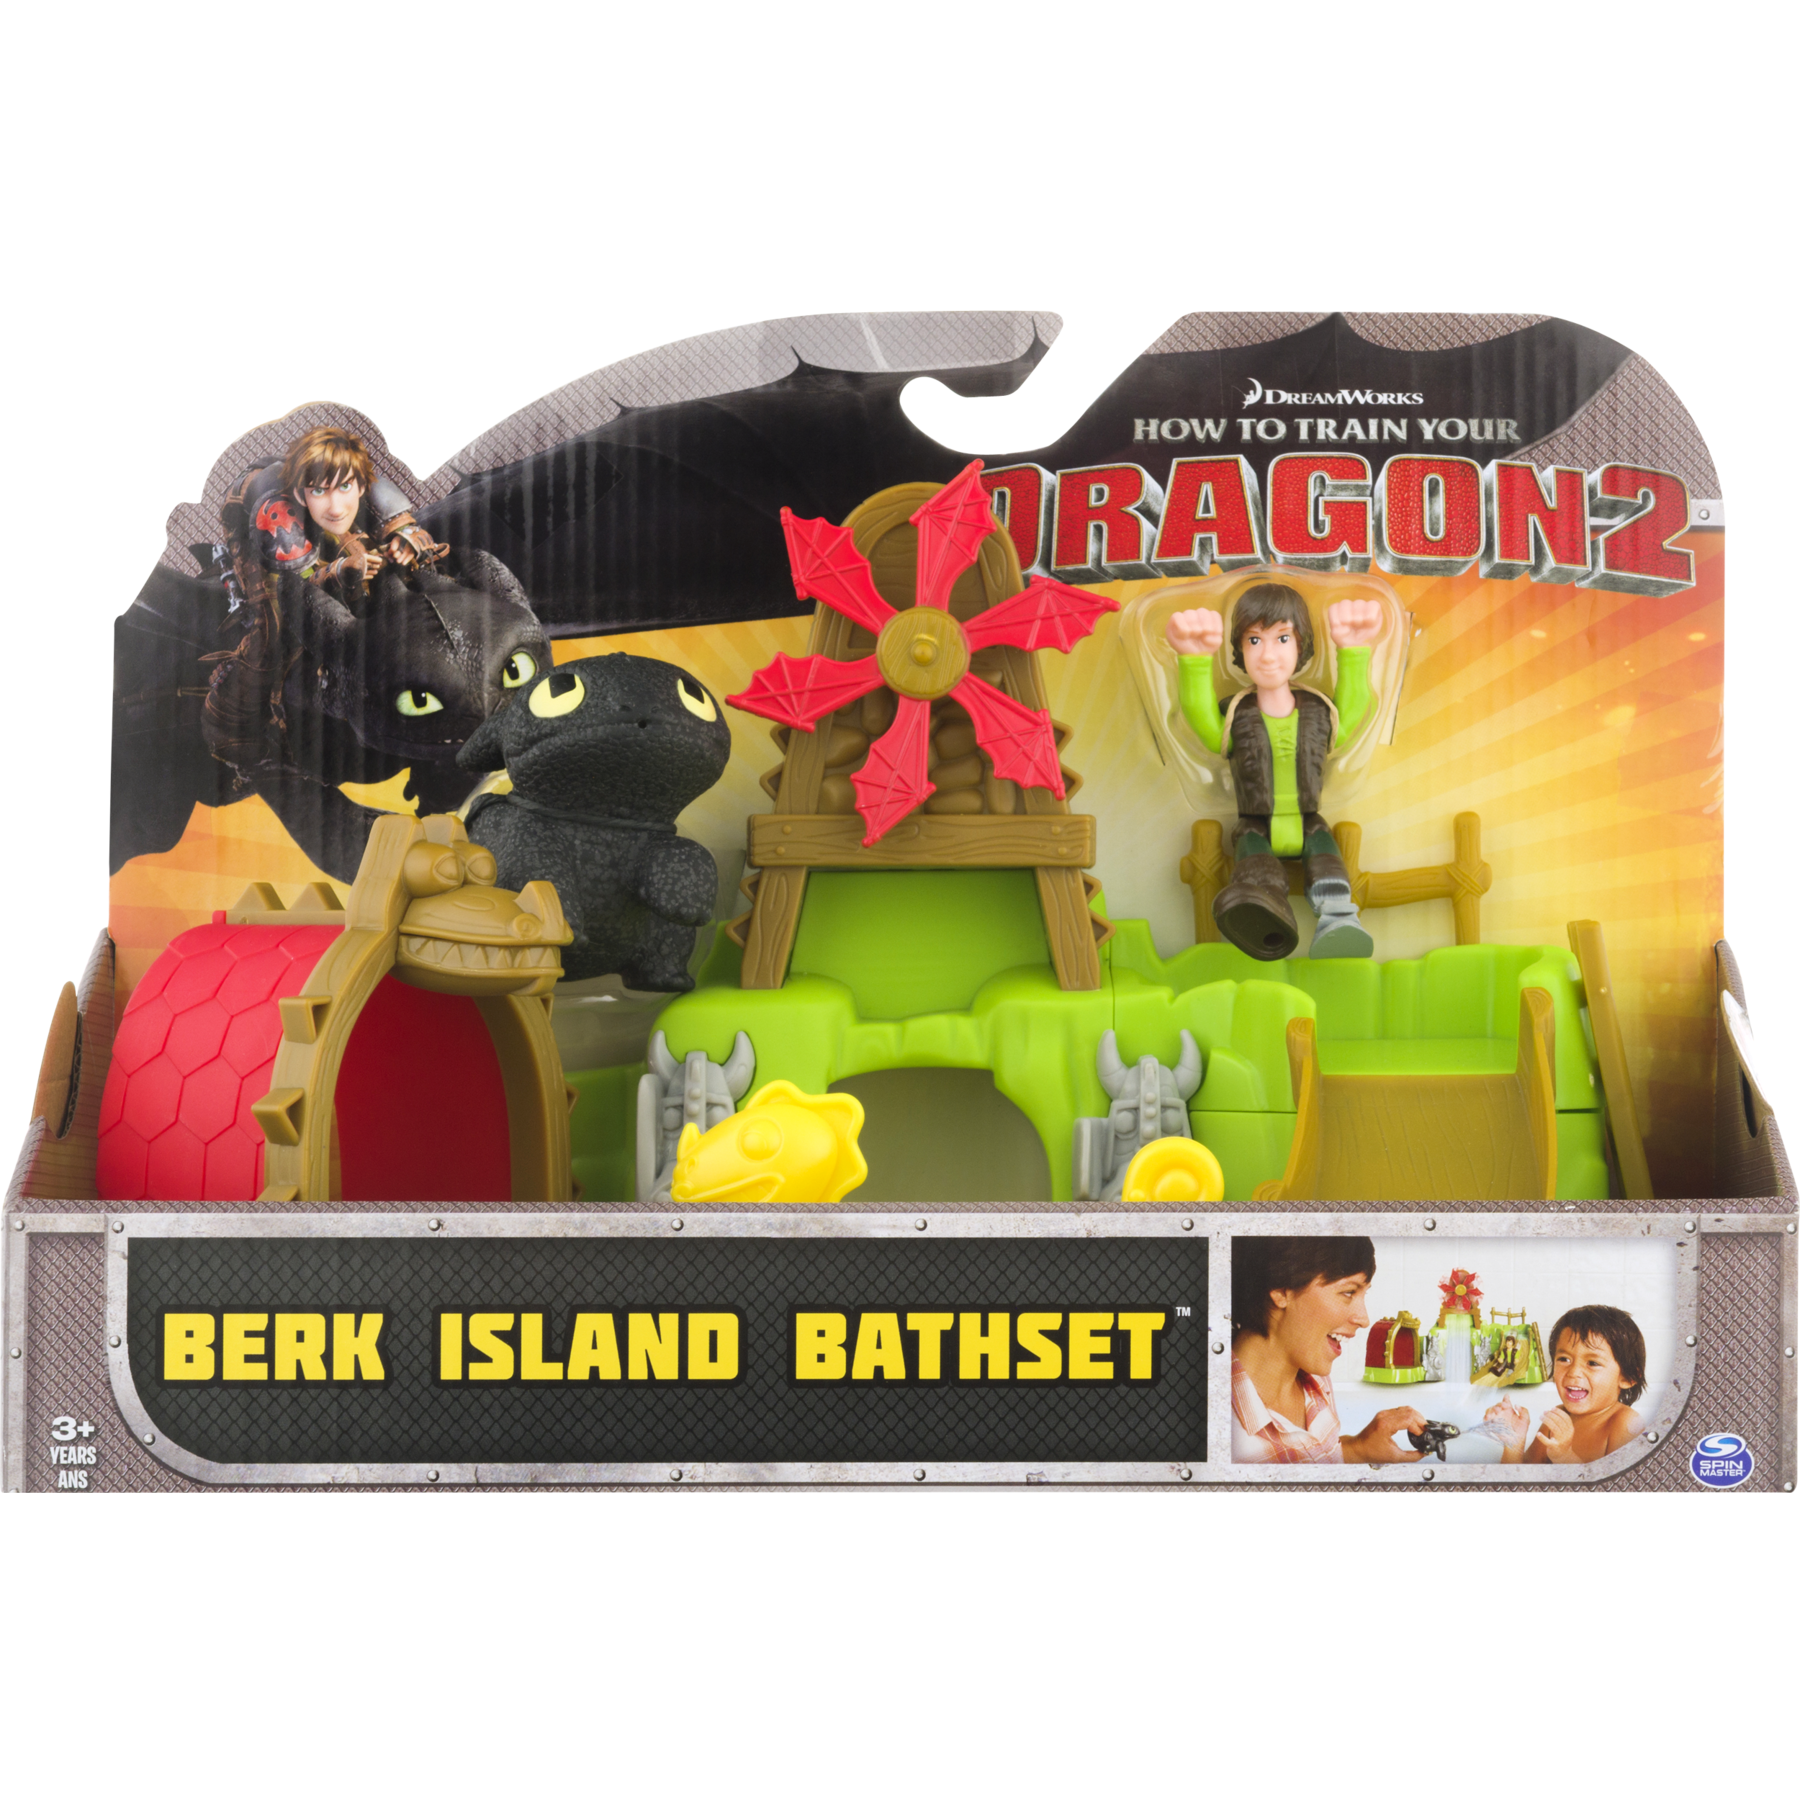 DreamWorks How to Train Your Dragon 2 Berk island Bath Set, 1.0 CT - image 4 of 5